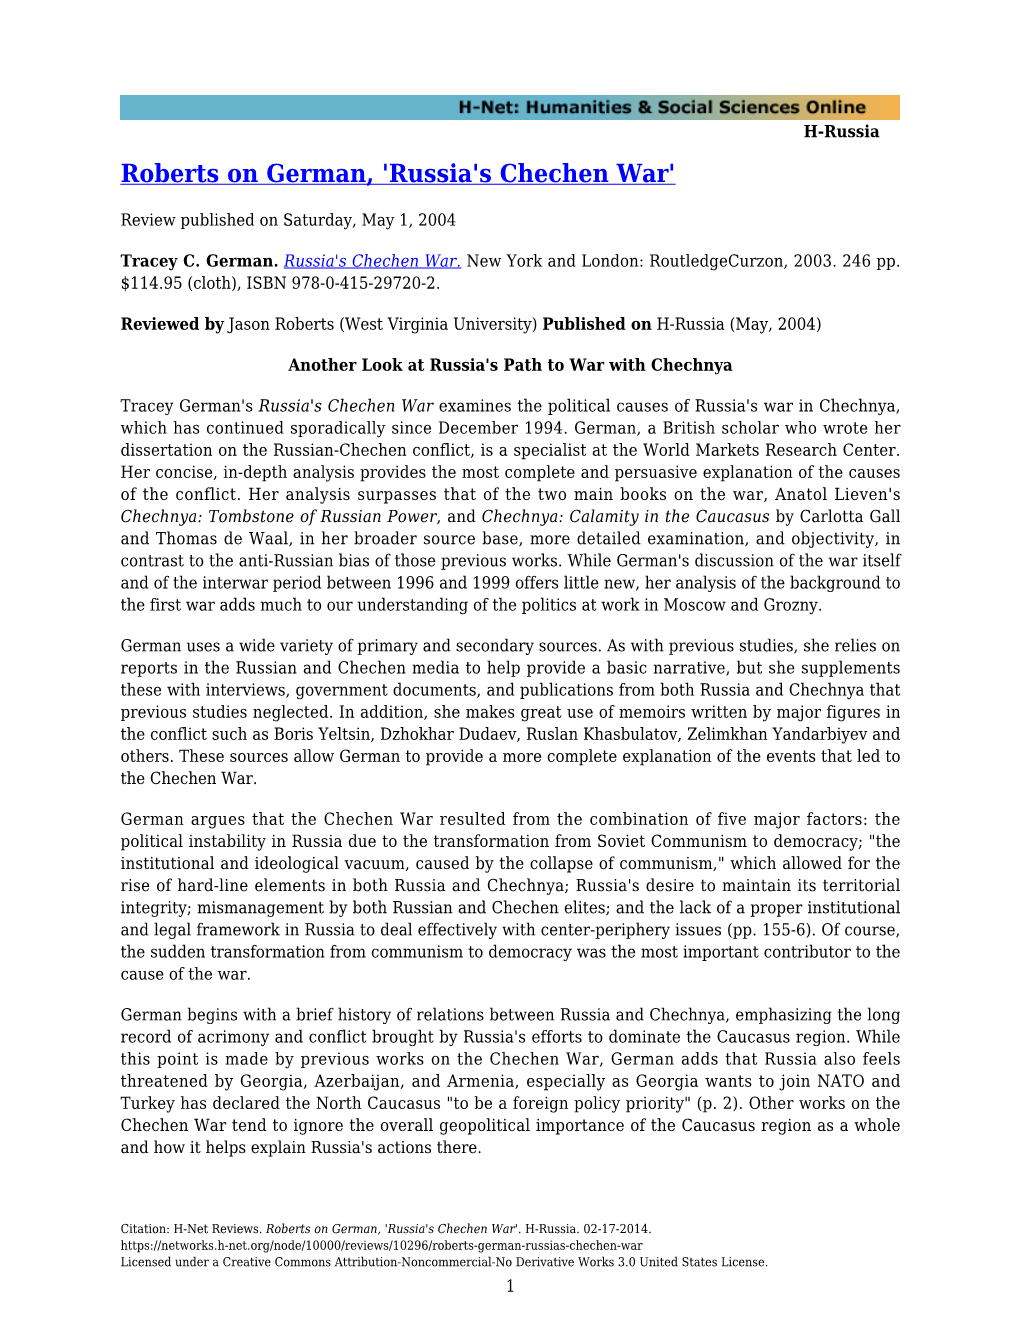 Roberts on German, 'Russia's Chechen War'